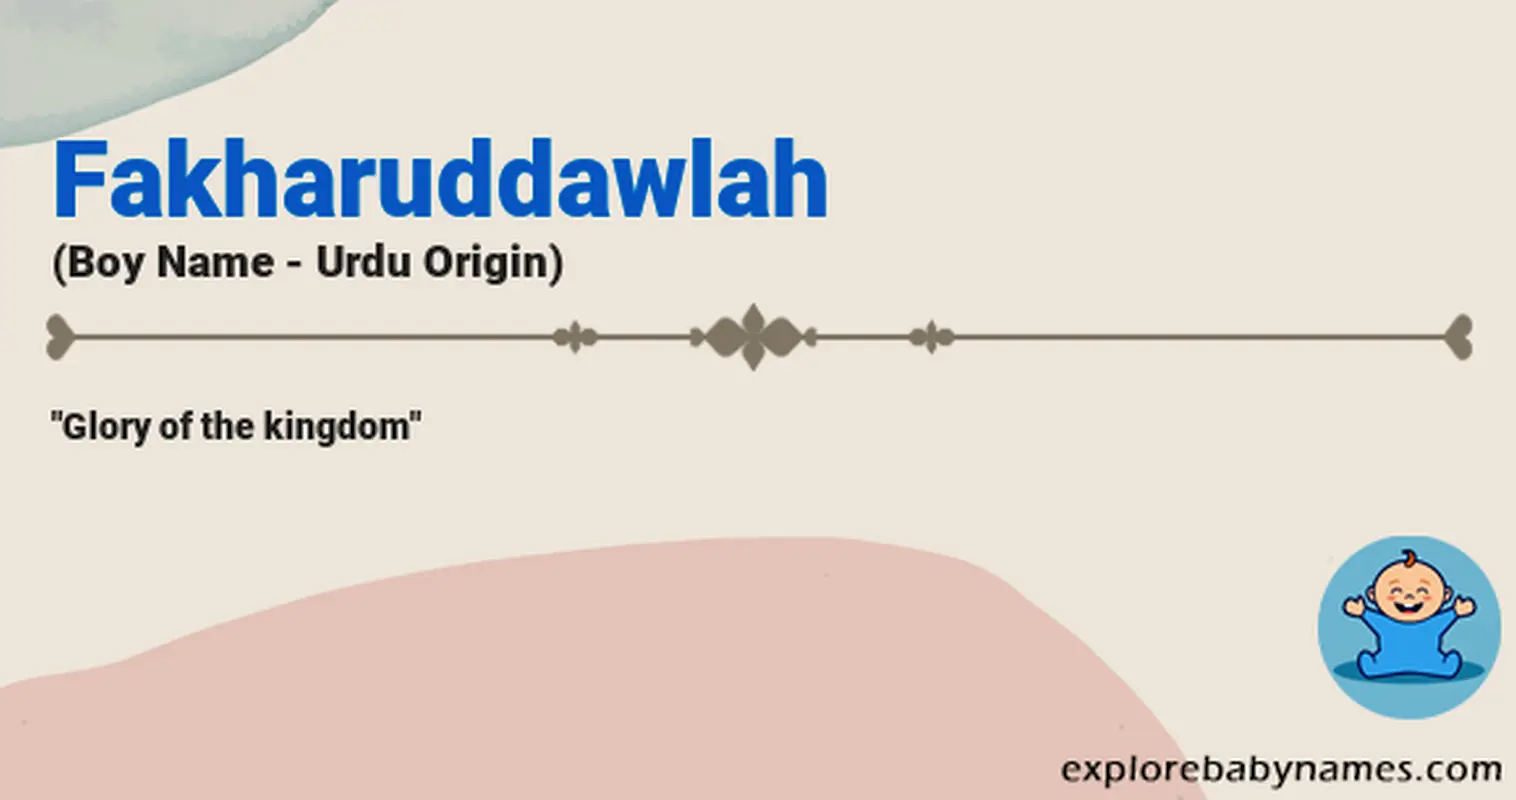 Meaning of Fakharuddawlah